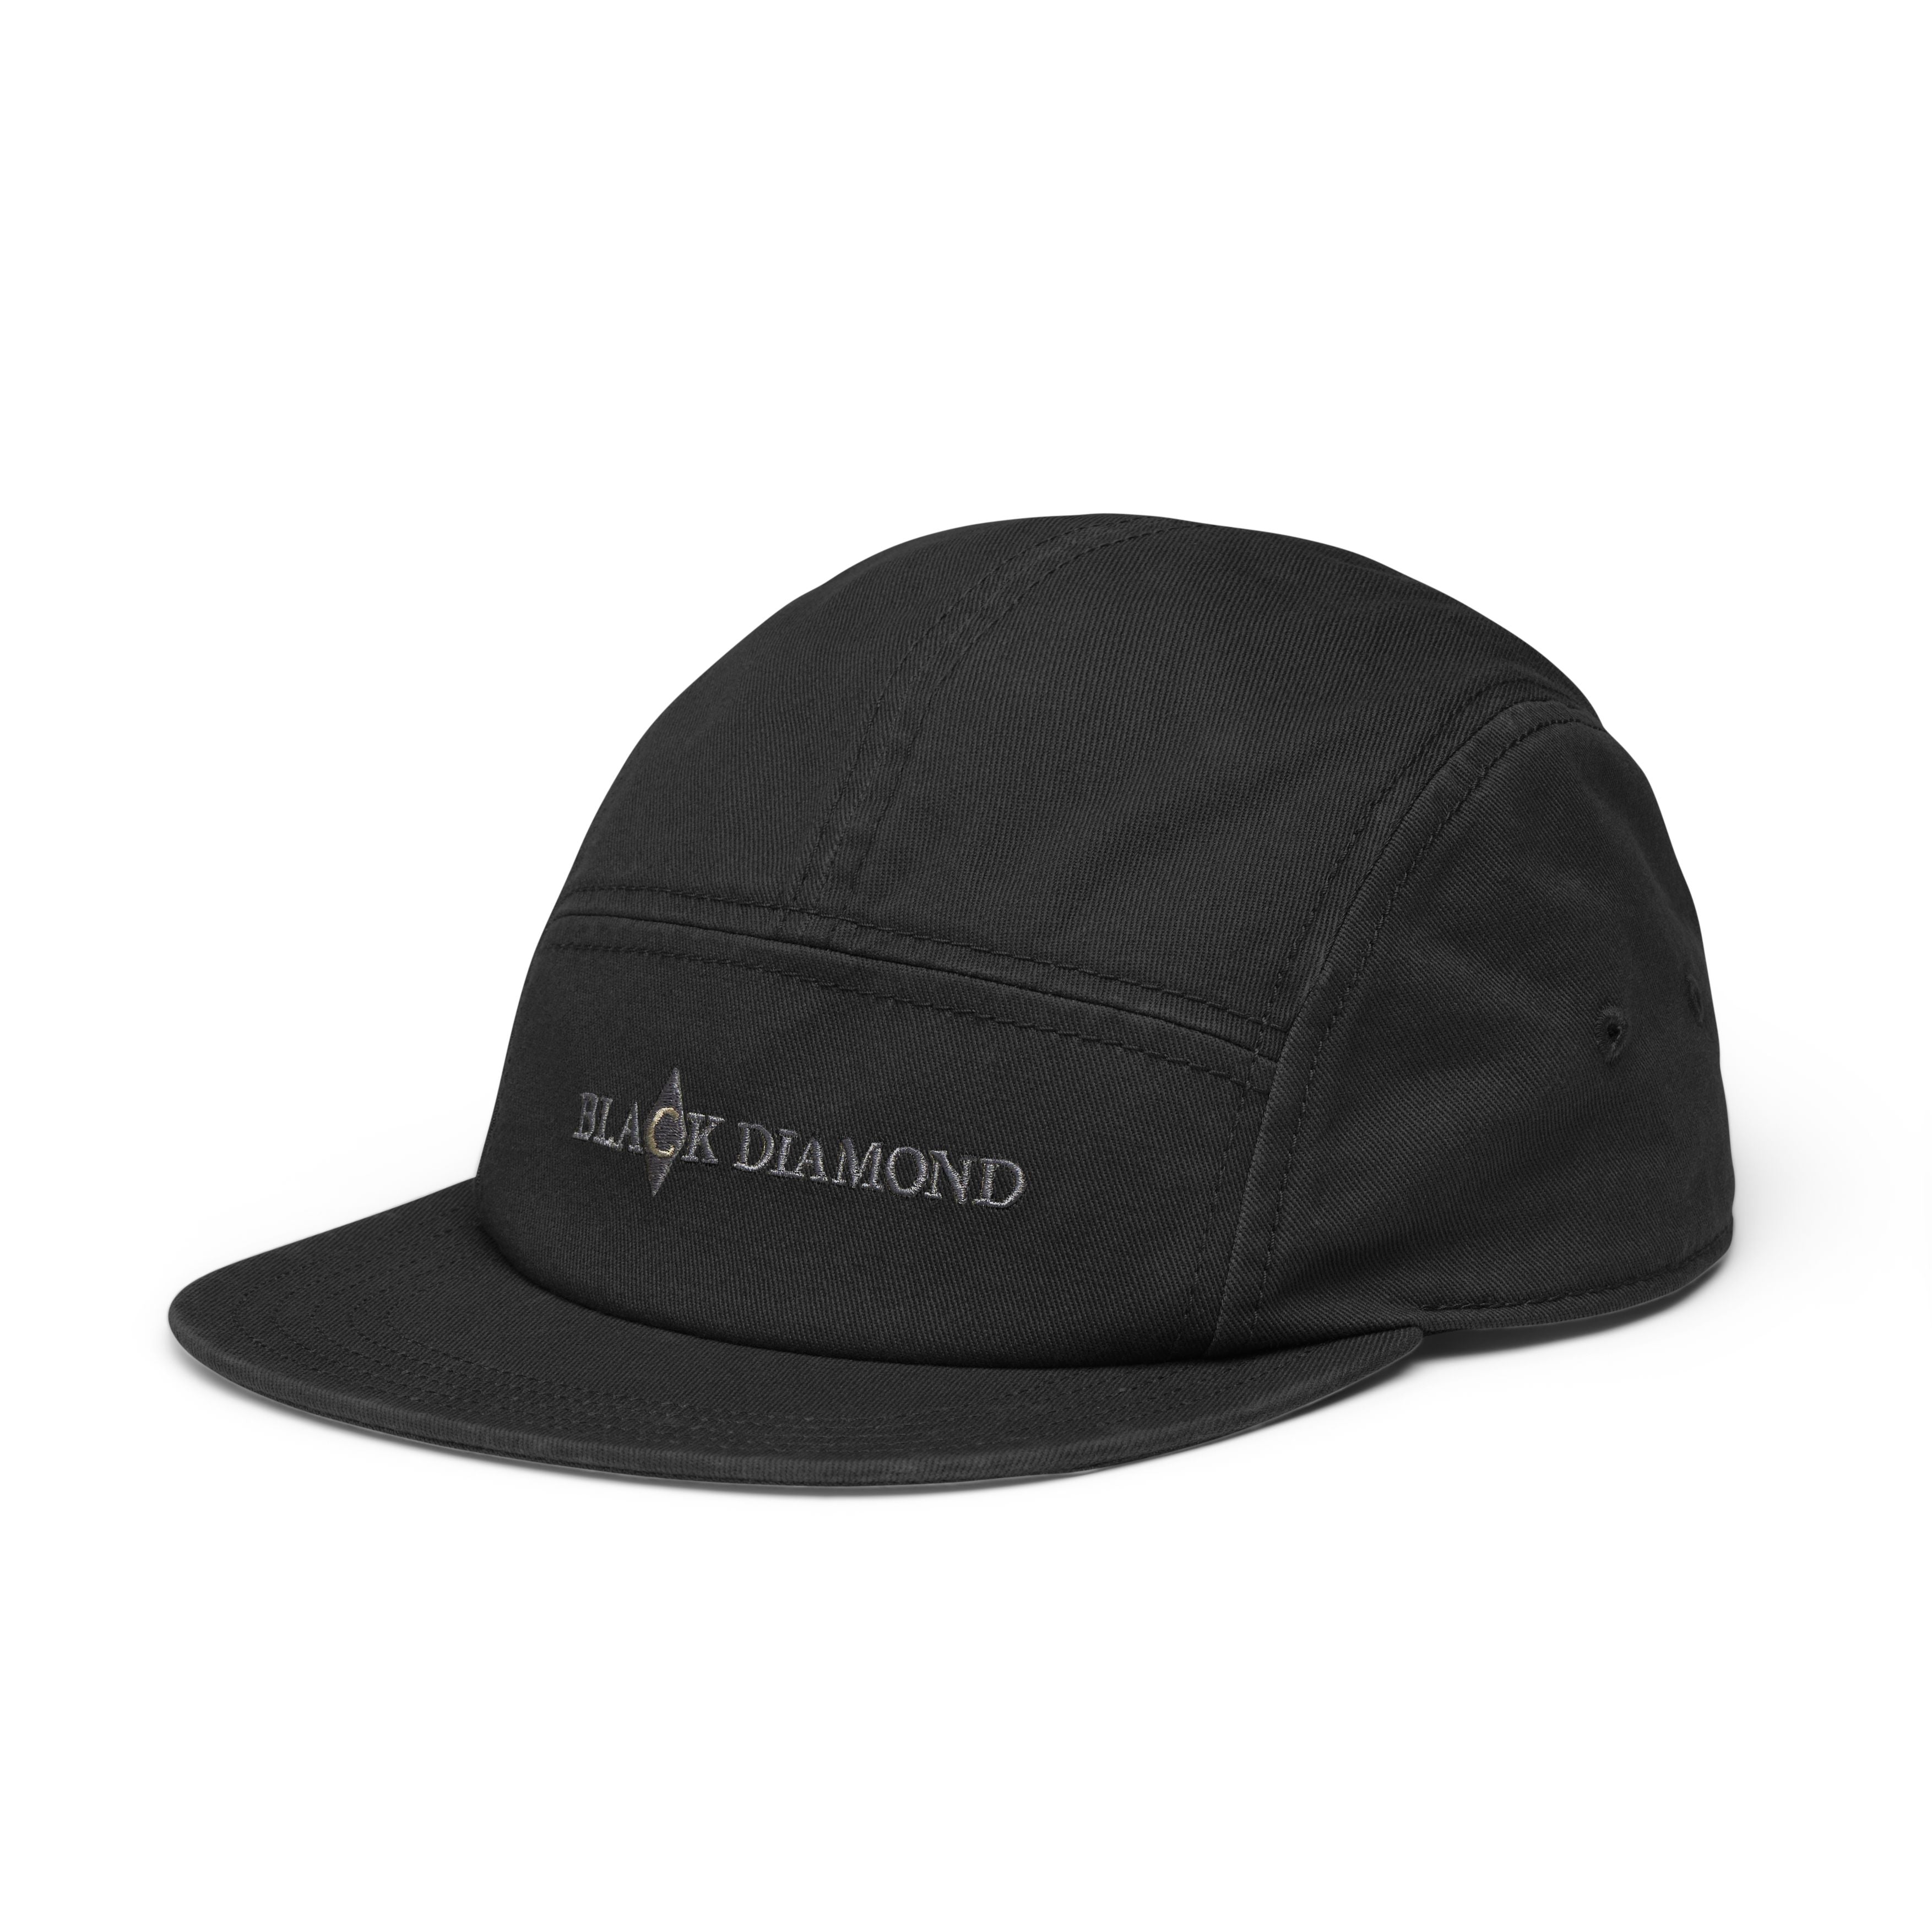 Black Diamond Men's Trucker Hat Khaki-Black-Bd Wordmark